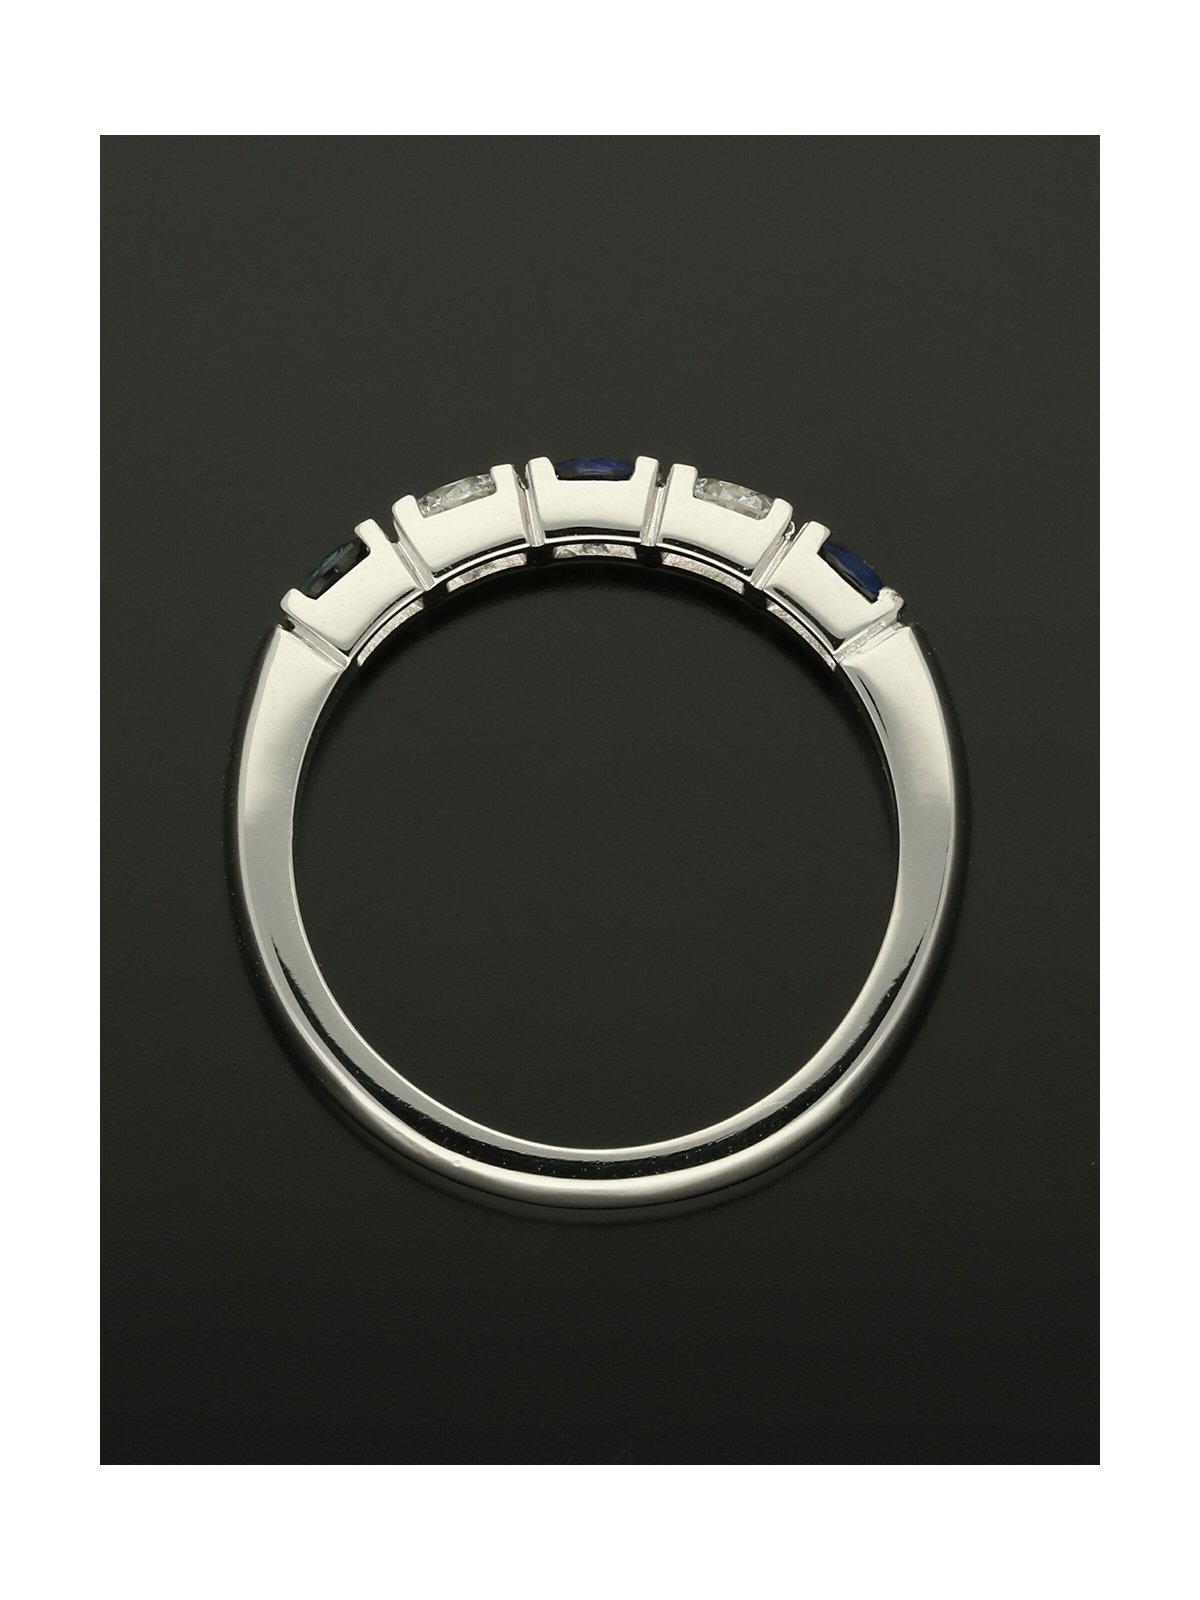 Sapphire & Diamond Five Stone Ring Round Brilliant Cut in Platinum